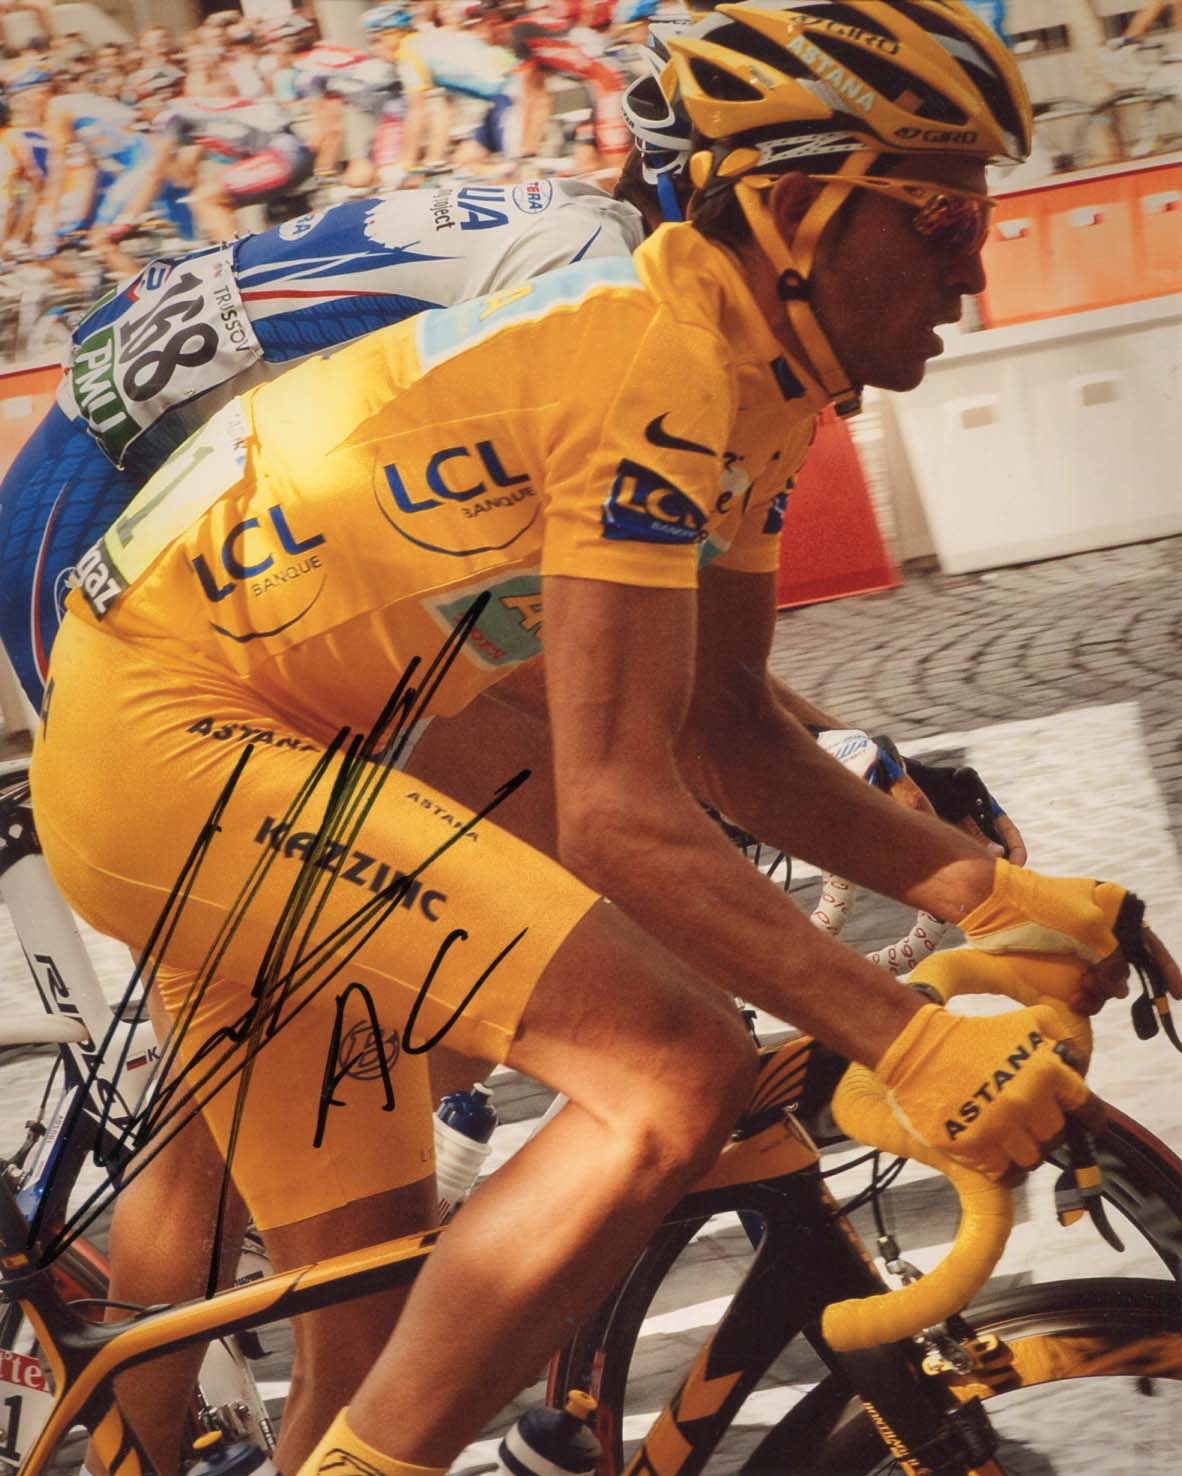 Alberto Contador Autograph Autogramm | ID 7587929817237